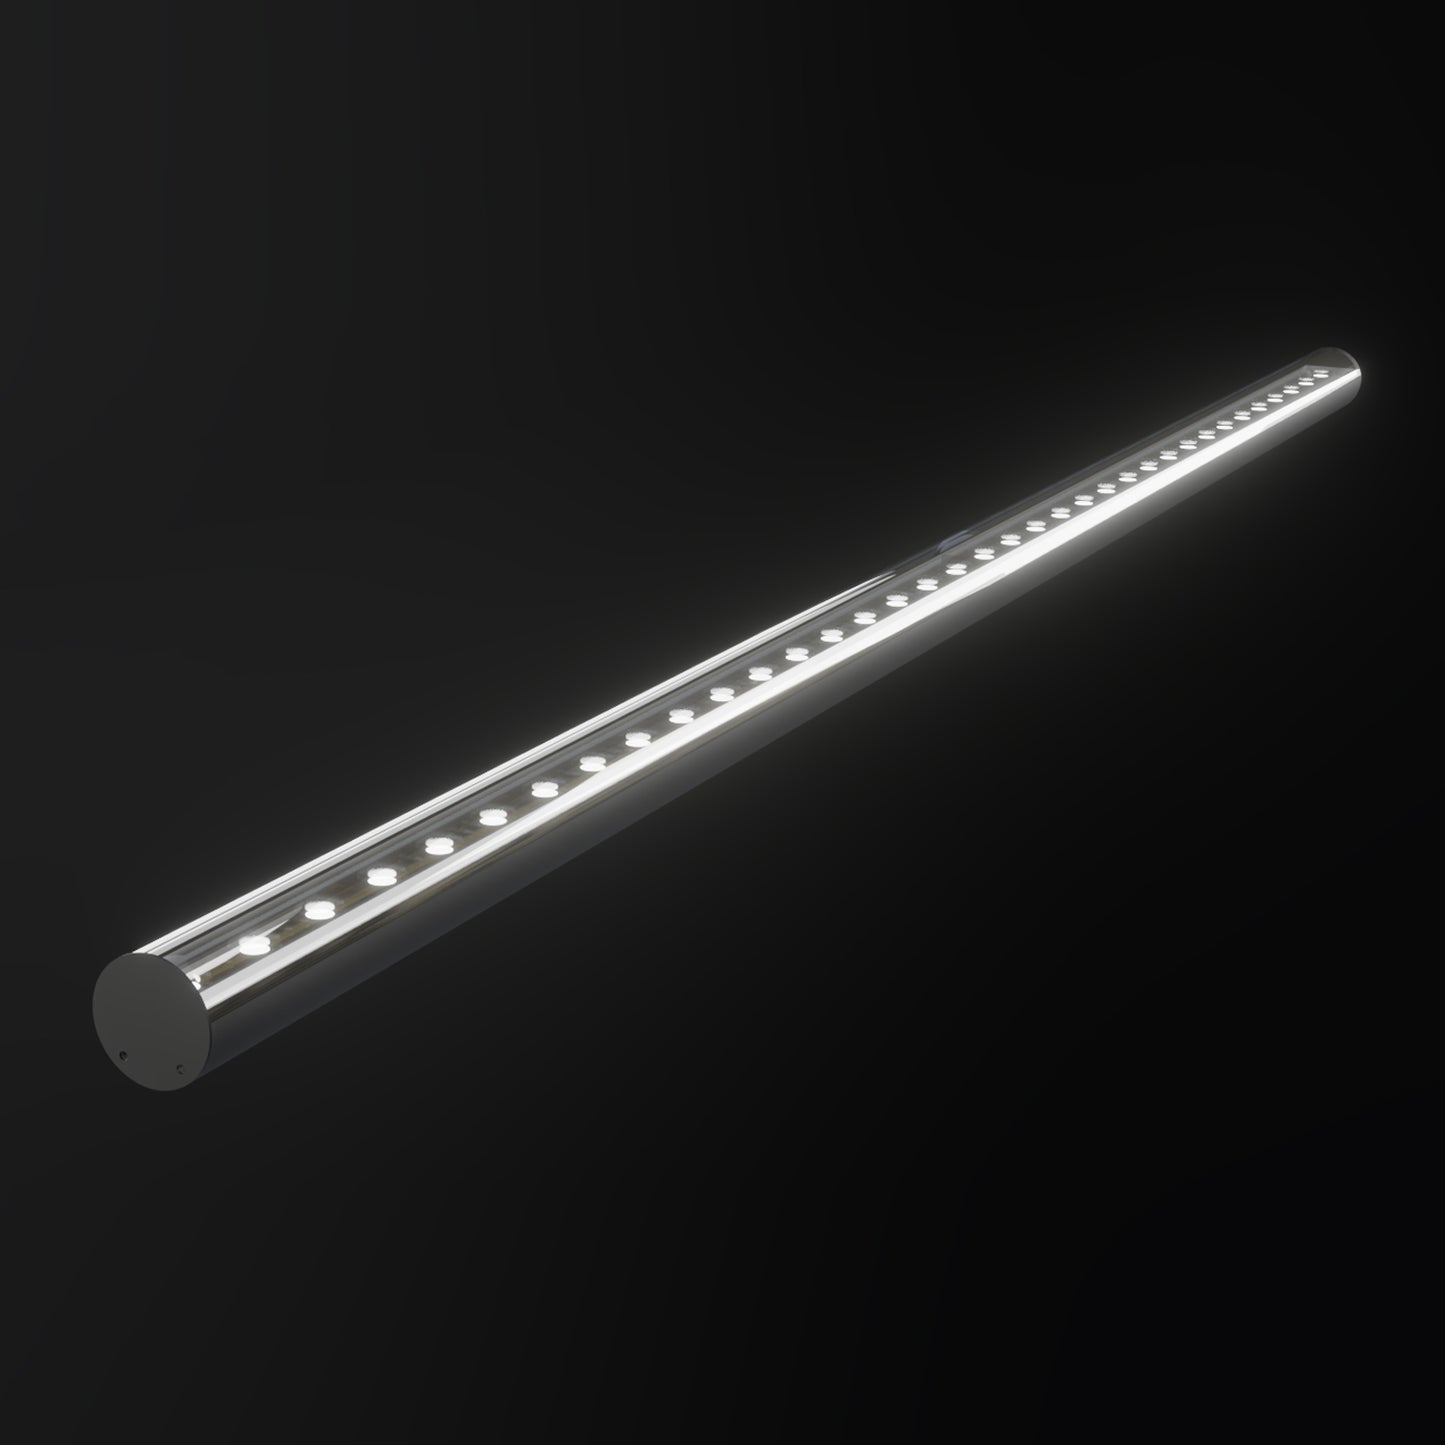 Super Cove Linear Lighting - RHEASCL-01A (With Base Plate)